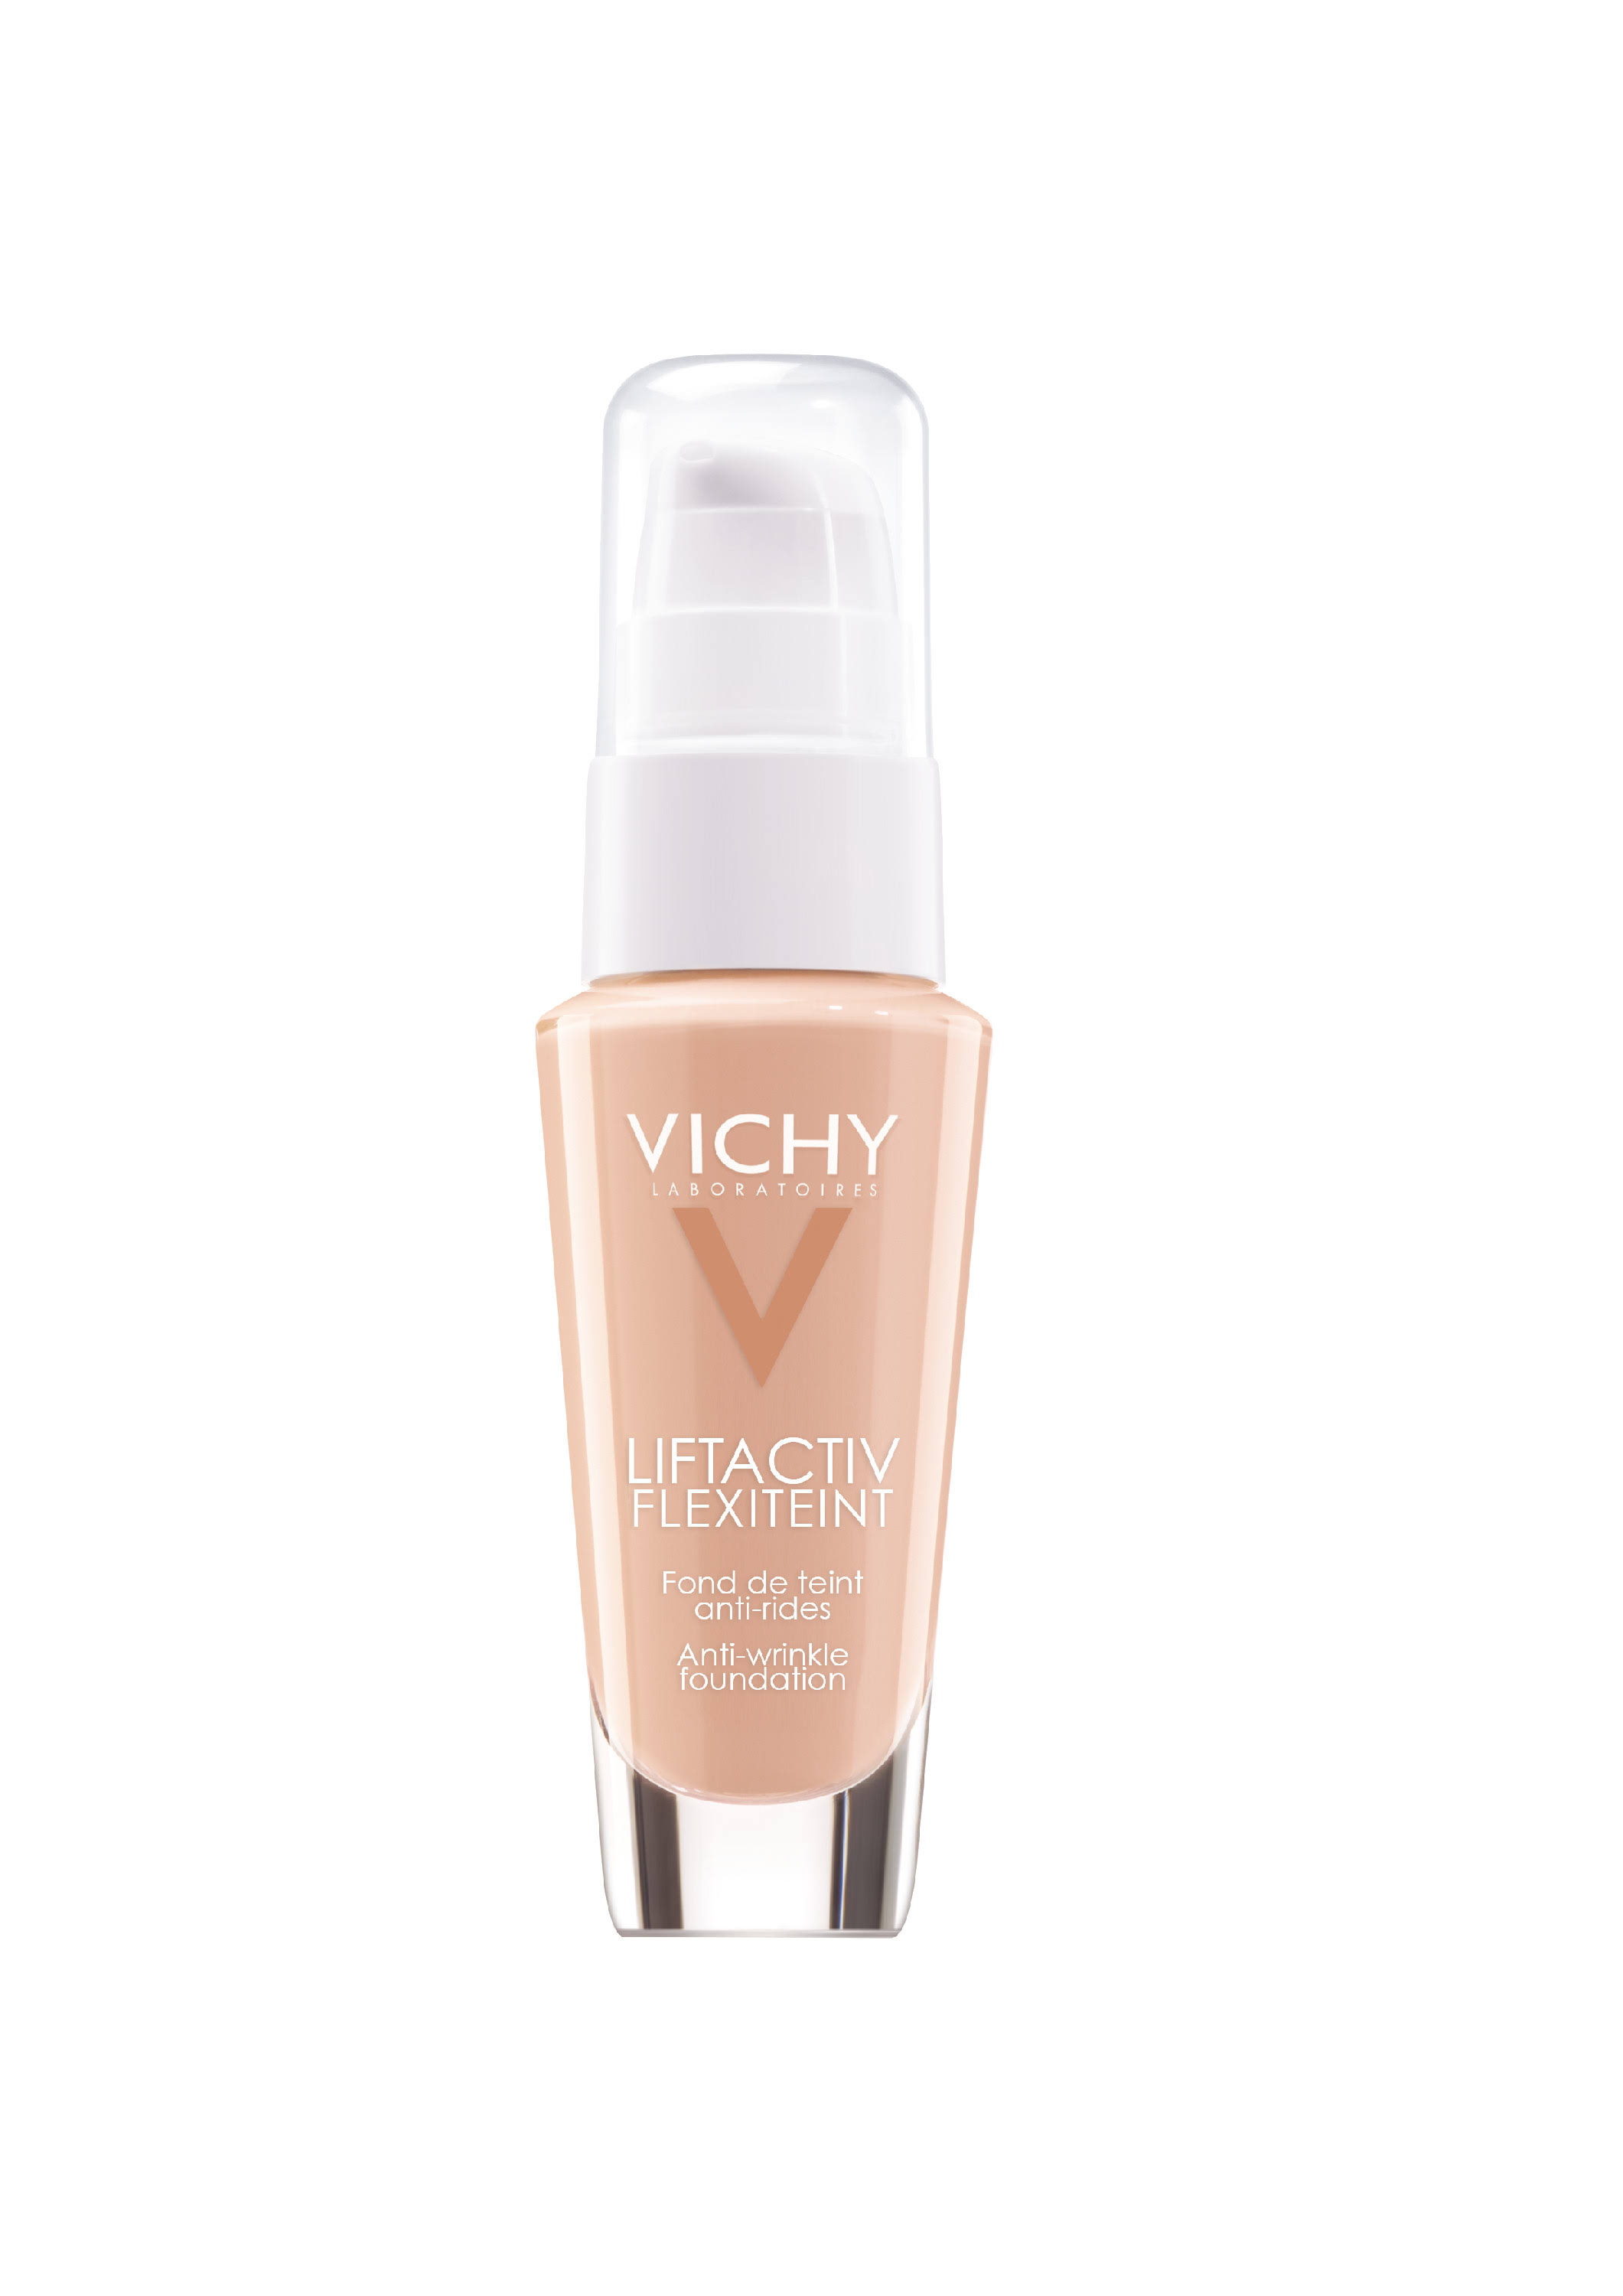 Vichy Liftactiv Flexiteint Anti Wrinkle Foundation - 25 Nude, 30ml